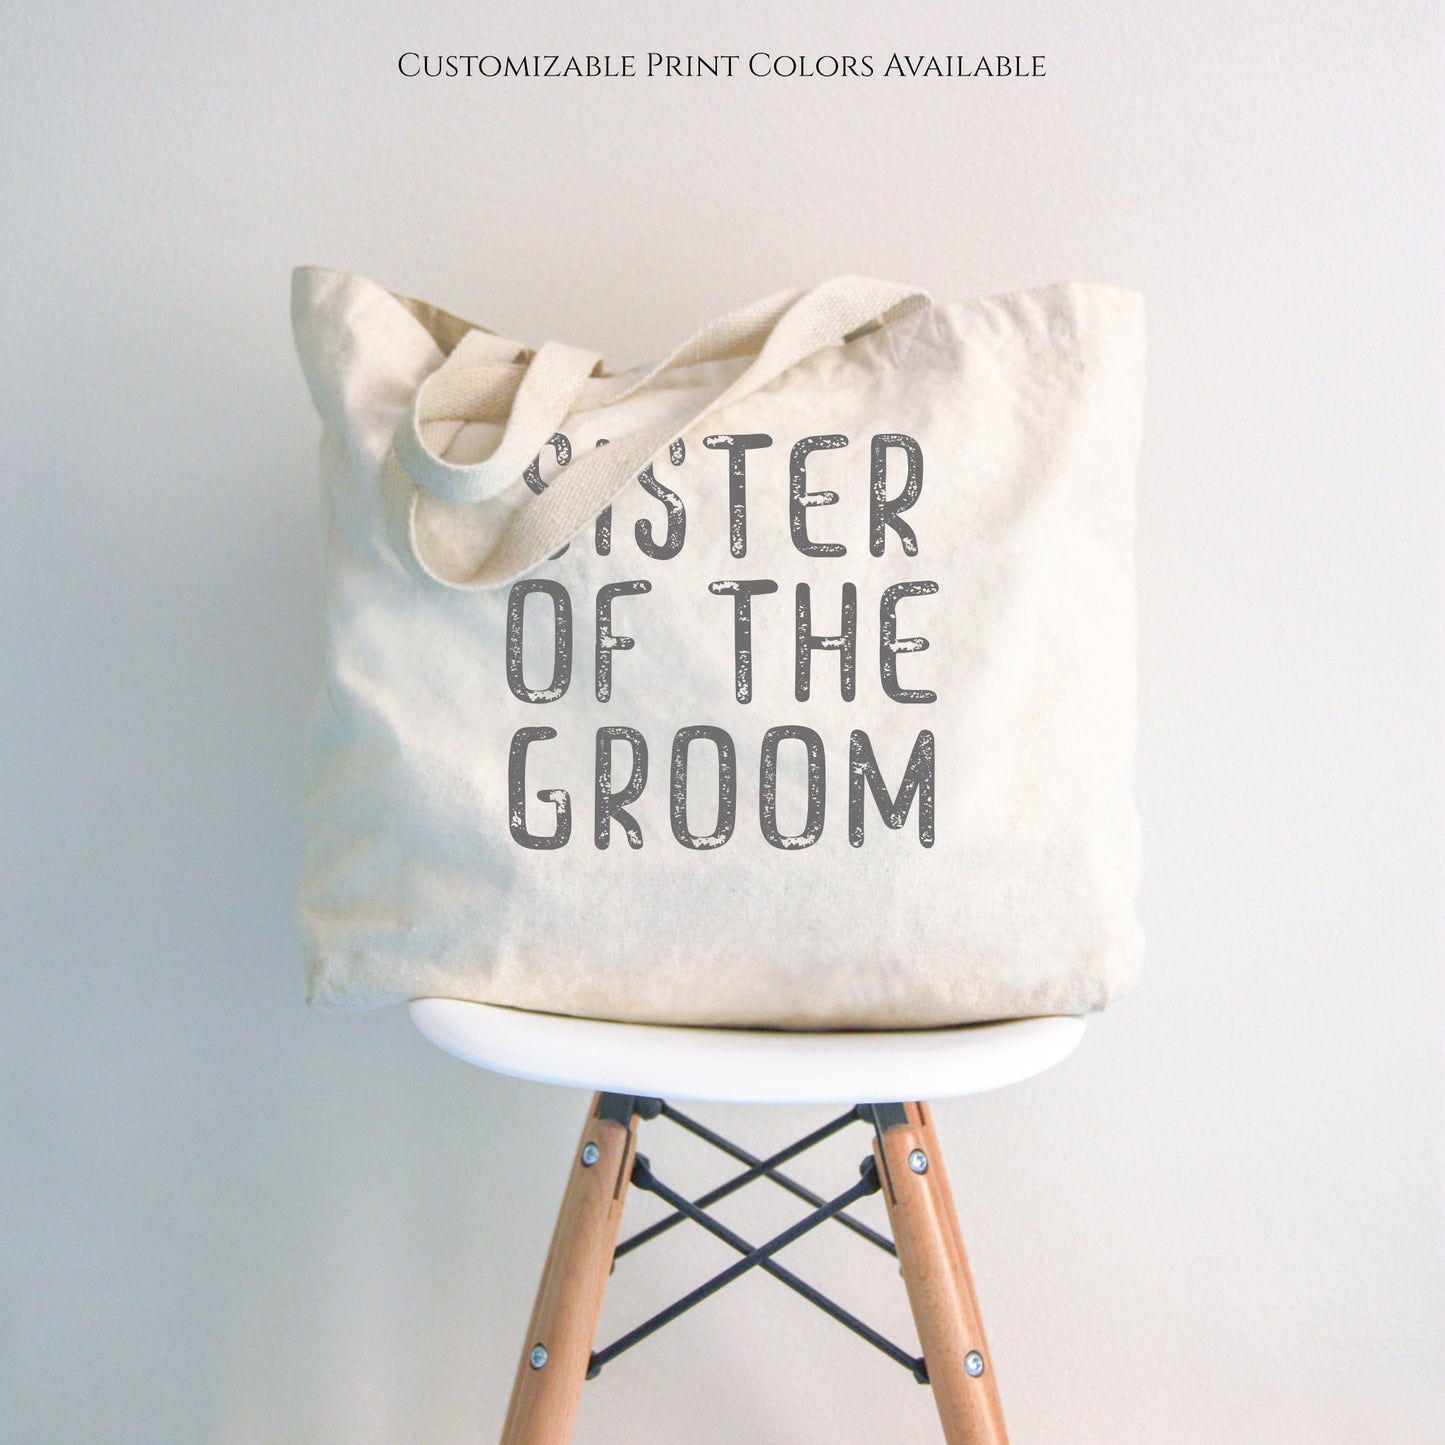 Bridesmaid Gift, Sister of the Groom, Canvas Tote Bag, Fabric Shoulder Bag, Wedding